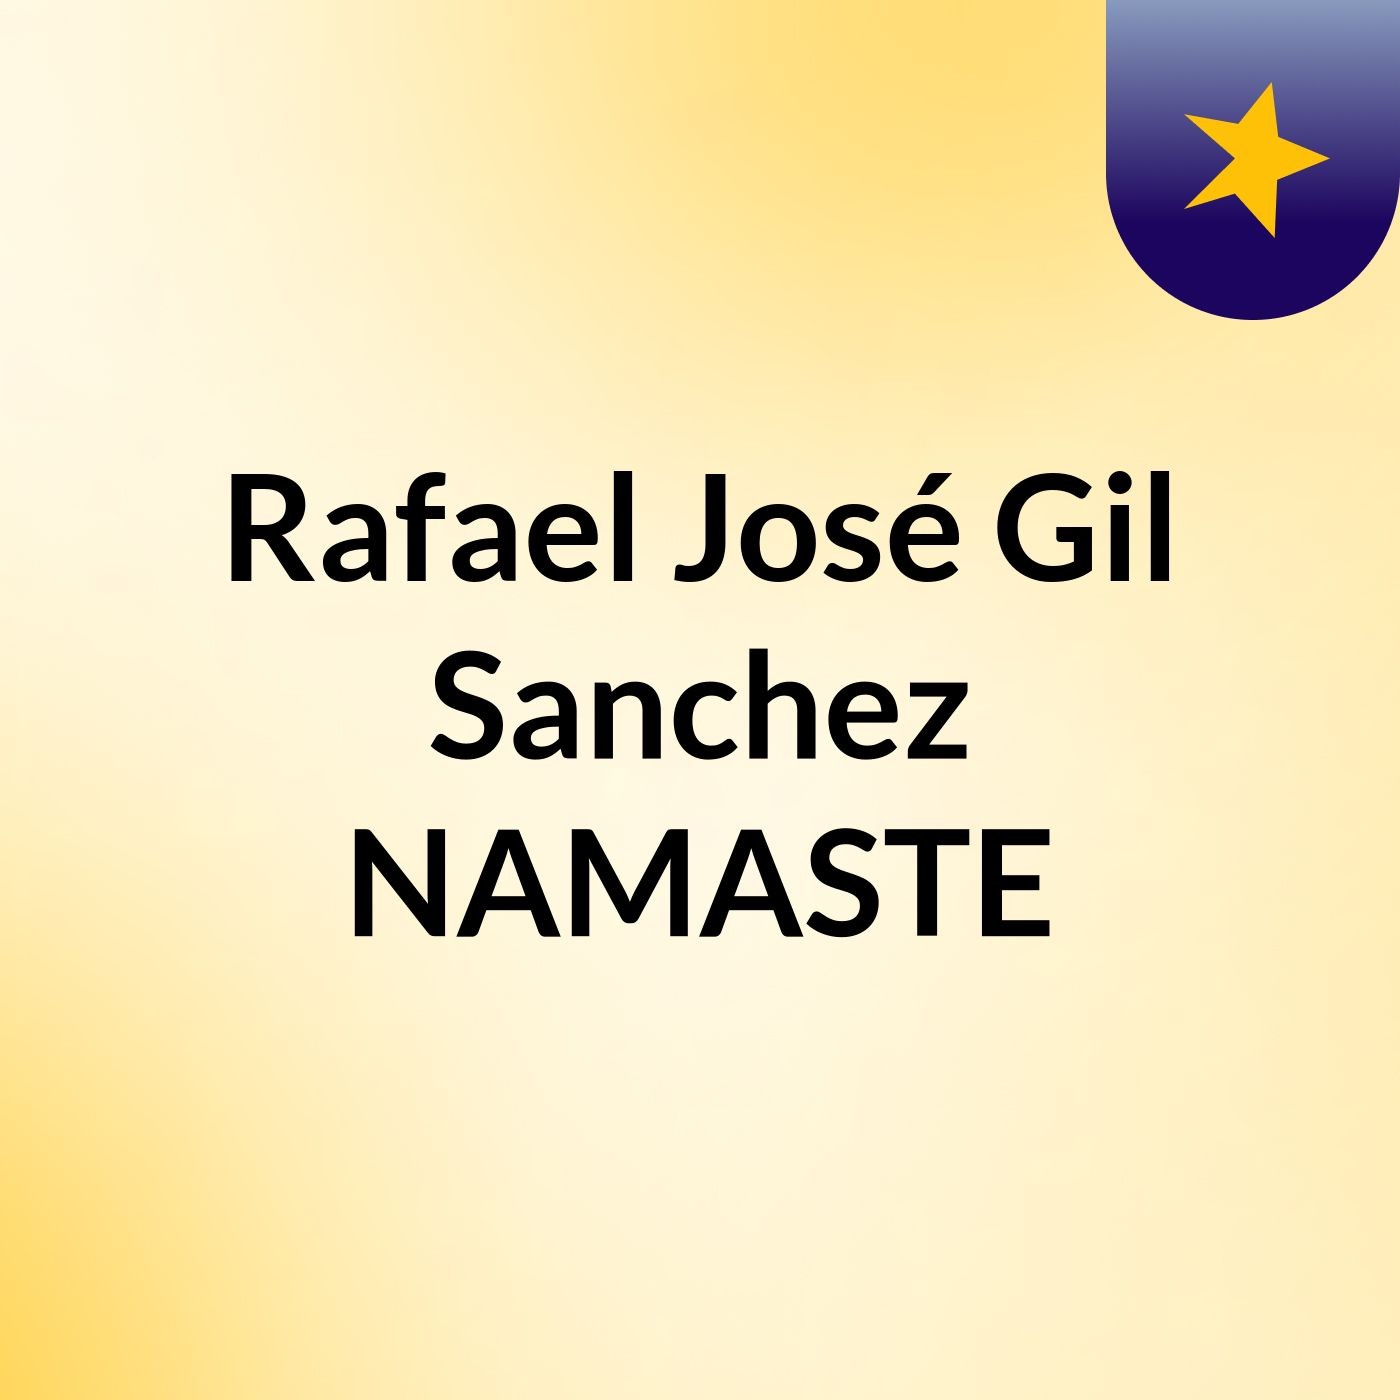 Rafael José Gil Sanchez NAMASTE